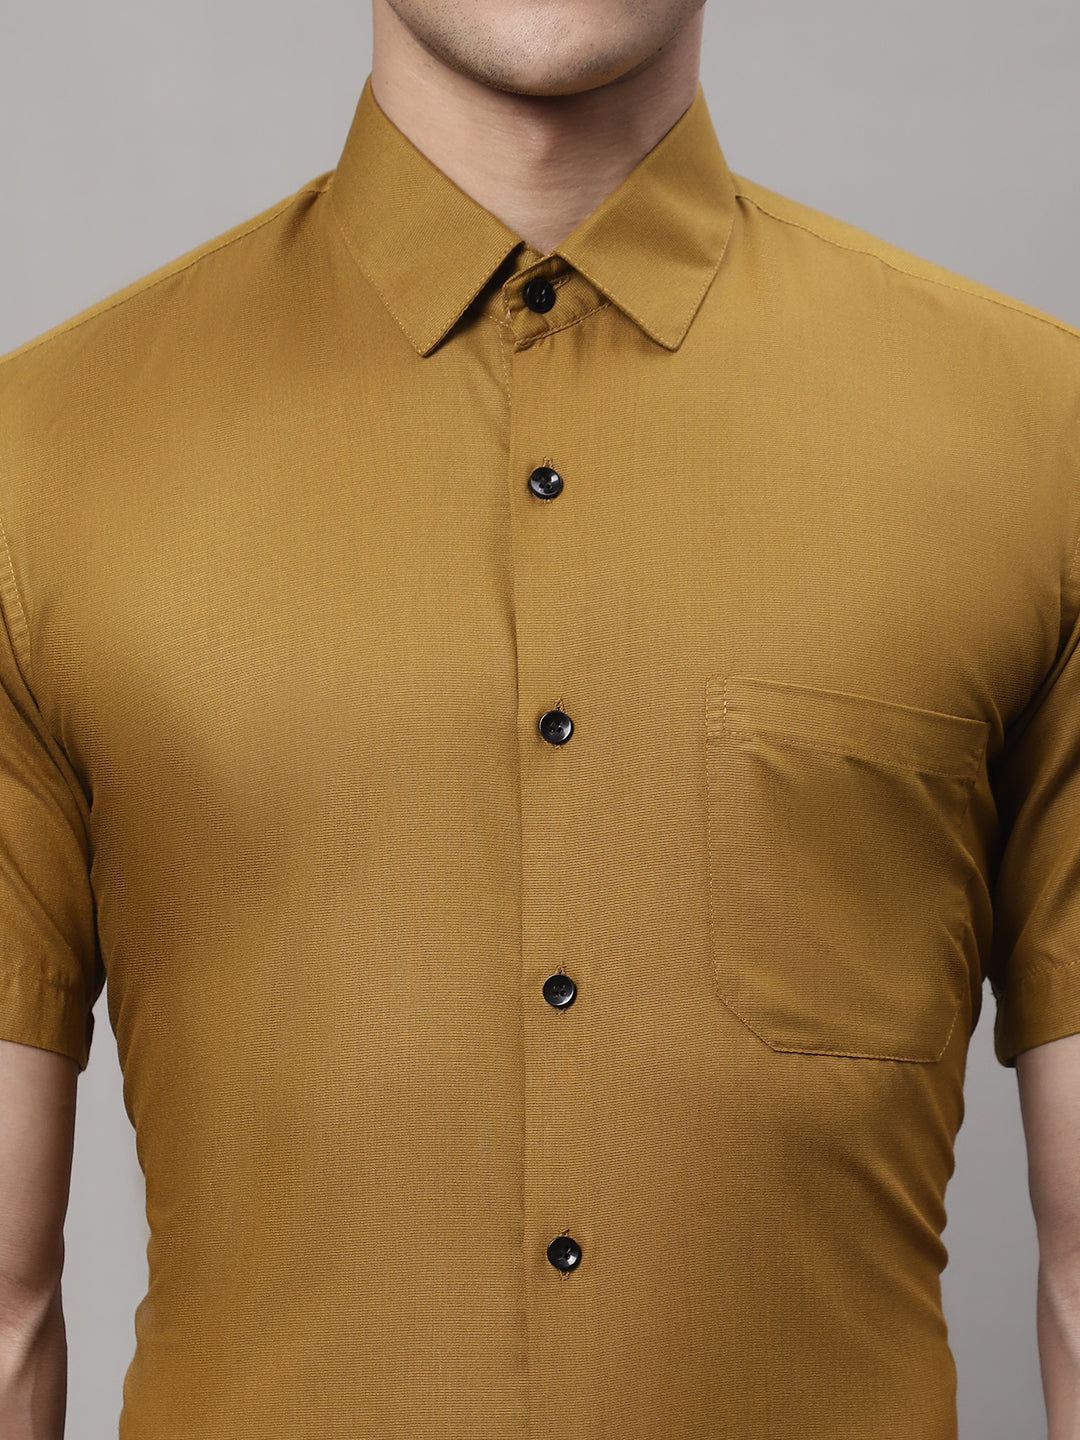 Jainish Men's Cotton Half Sleeves Solid Formal Shirts